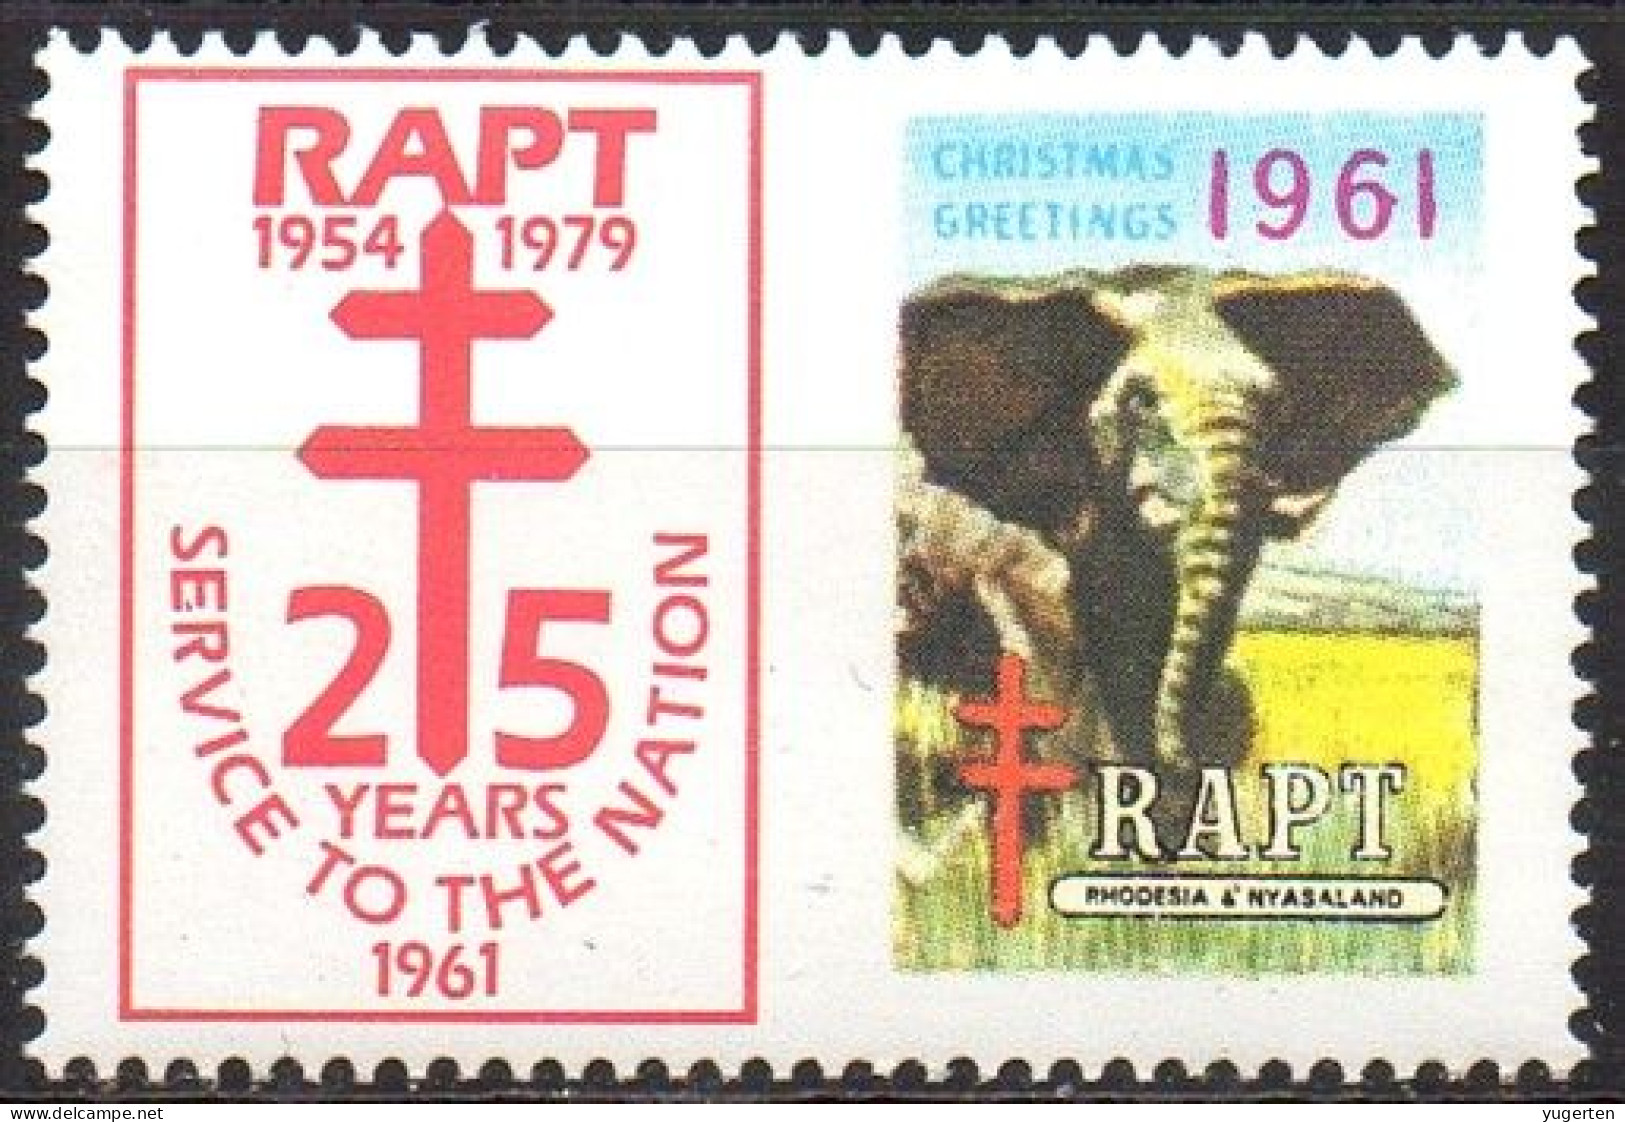 RODHESIA 1961 - Label - Local Post - RAPT - Elephants  Elephants Elefanten Elefantes Elefanti Fauna Animals Mammals - Eléphants